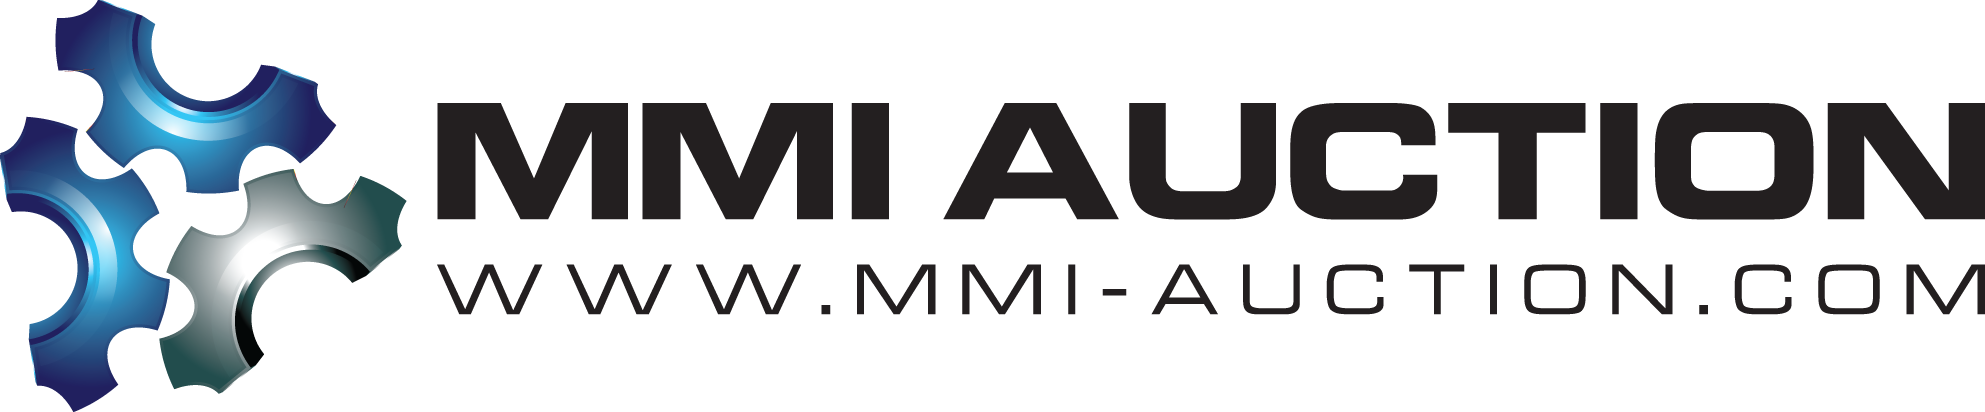 MMI-Auction Logo